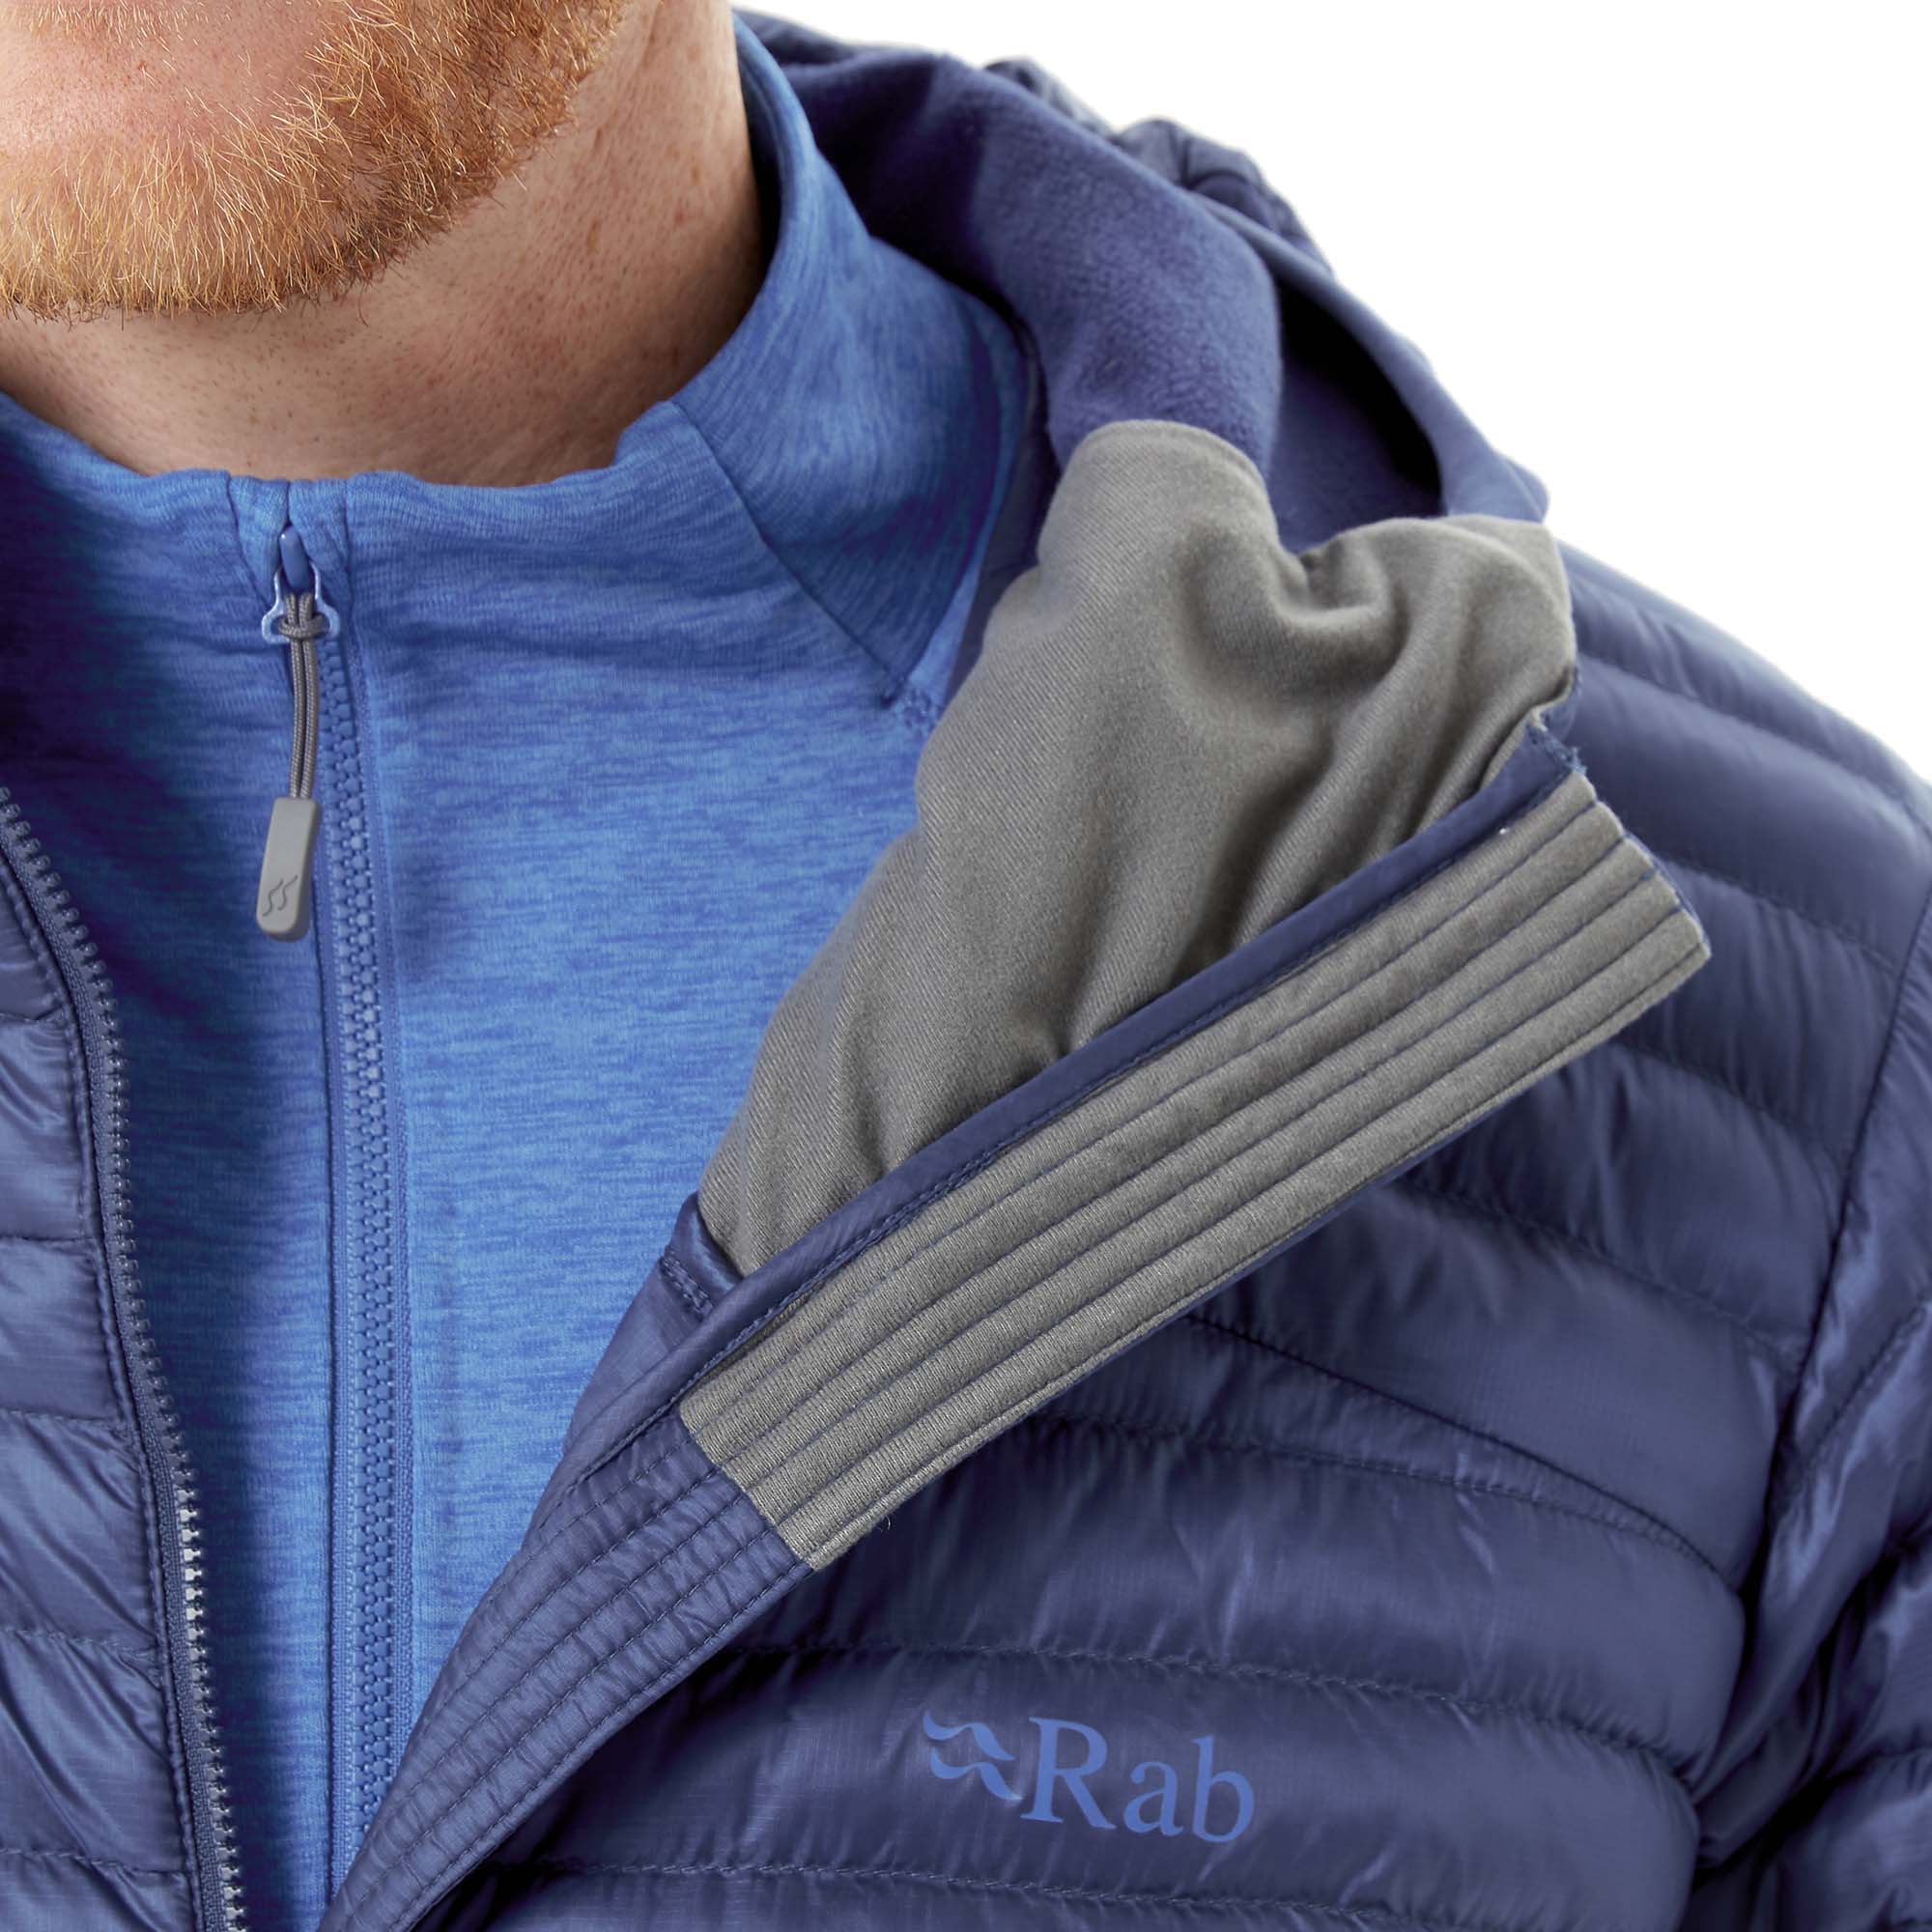 Rab Cirrus Flex 2.0 Hoody Men's Insulated Jacket